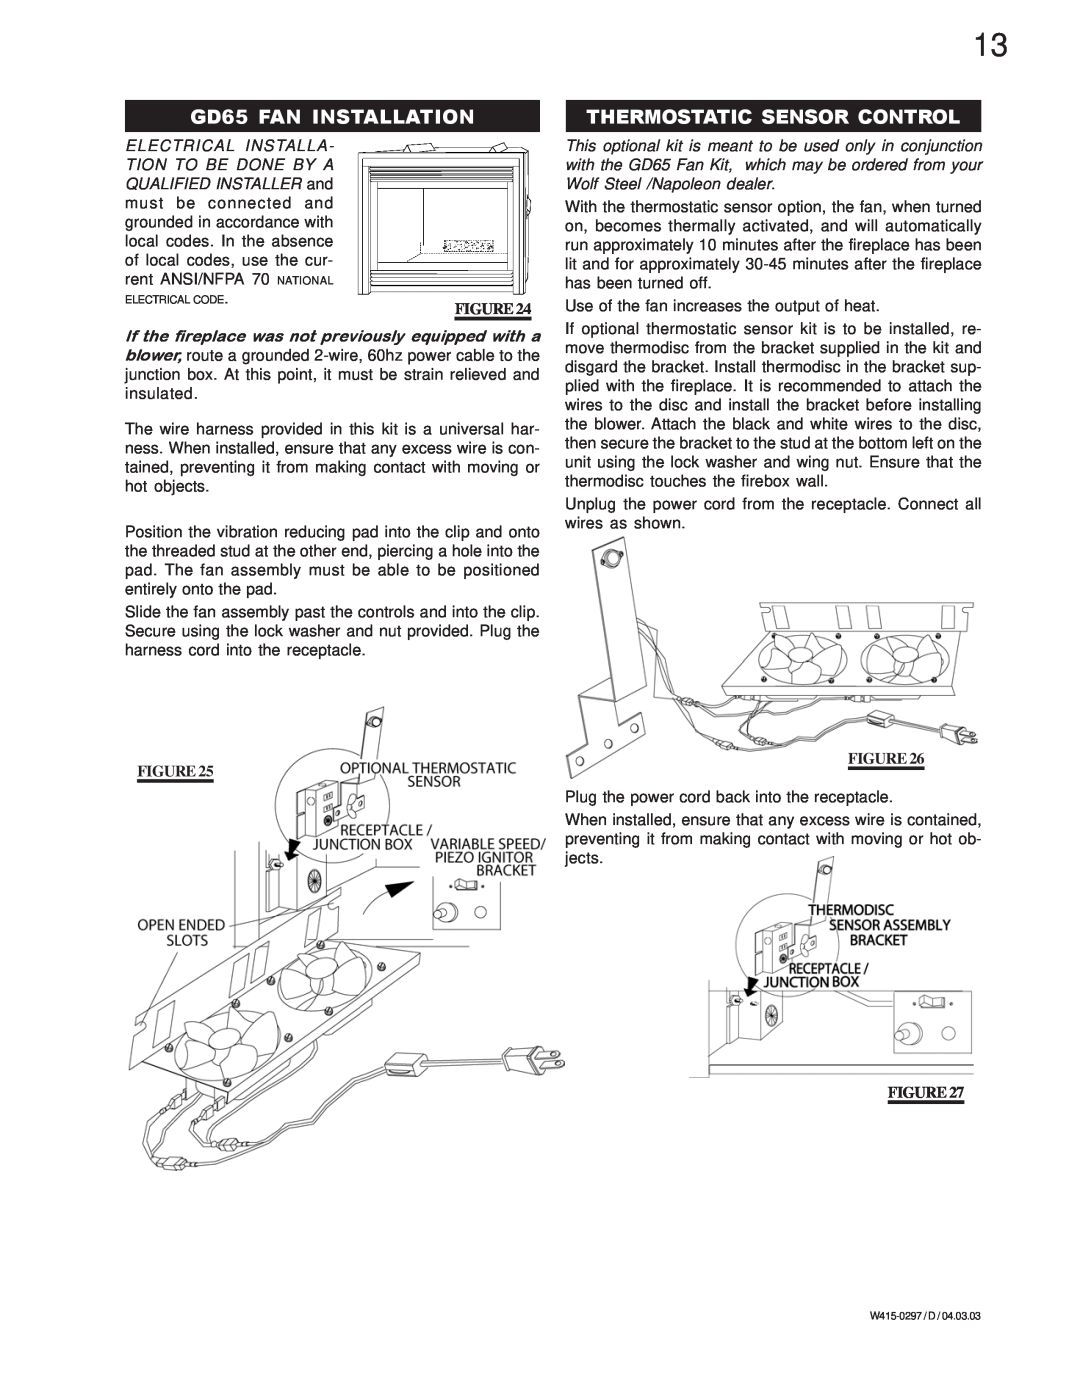 Napoleon Grills GVF36P, GVF36N manual GD65 FAN INSTALLATION, Thermostatic Sensor Control 